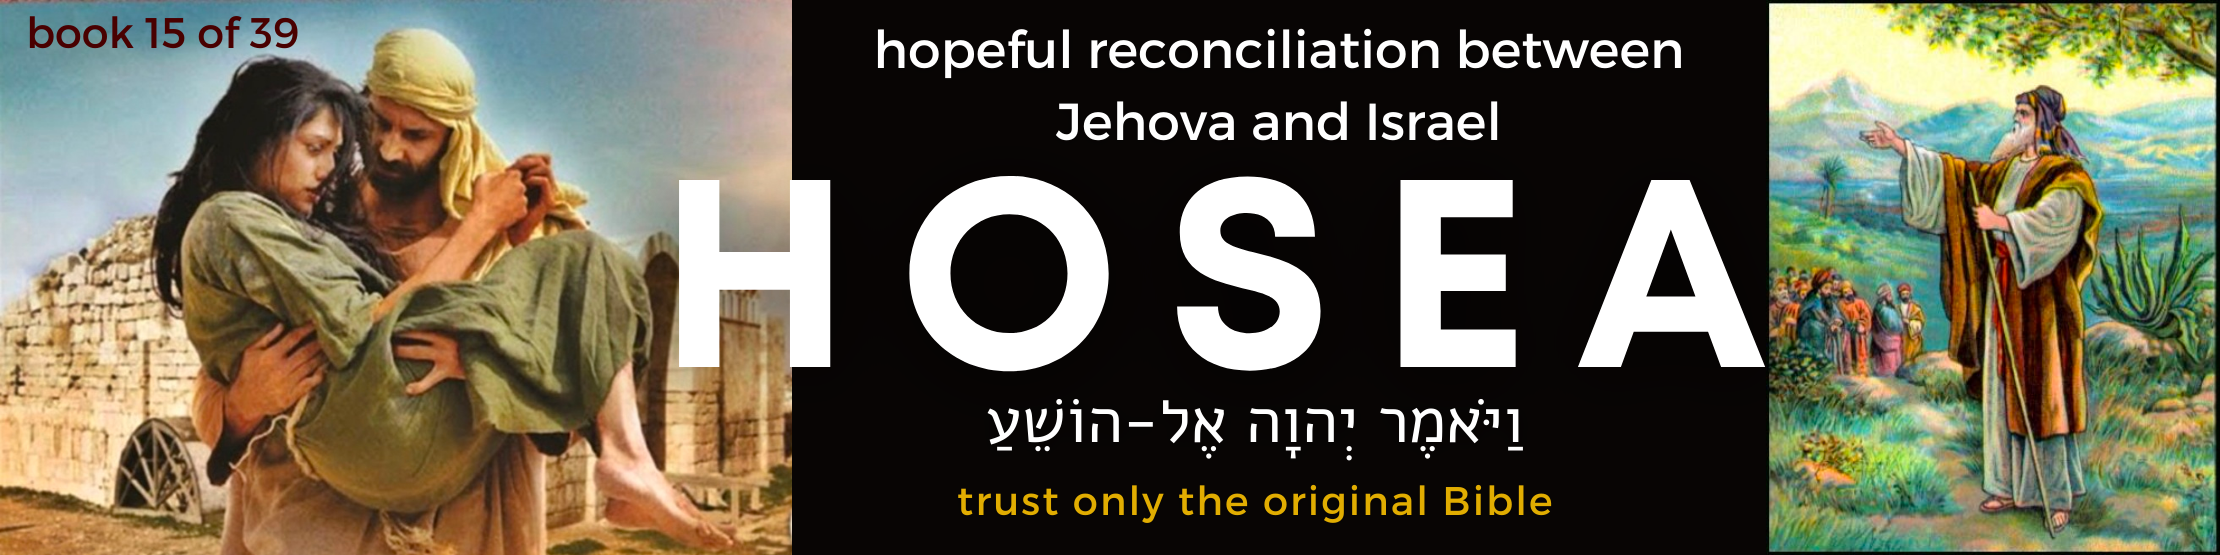 15 Hosea book - original bible - banner